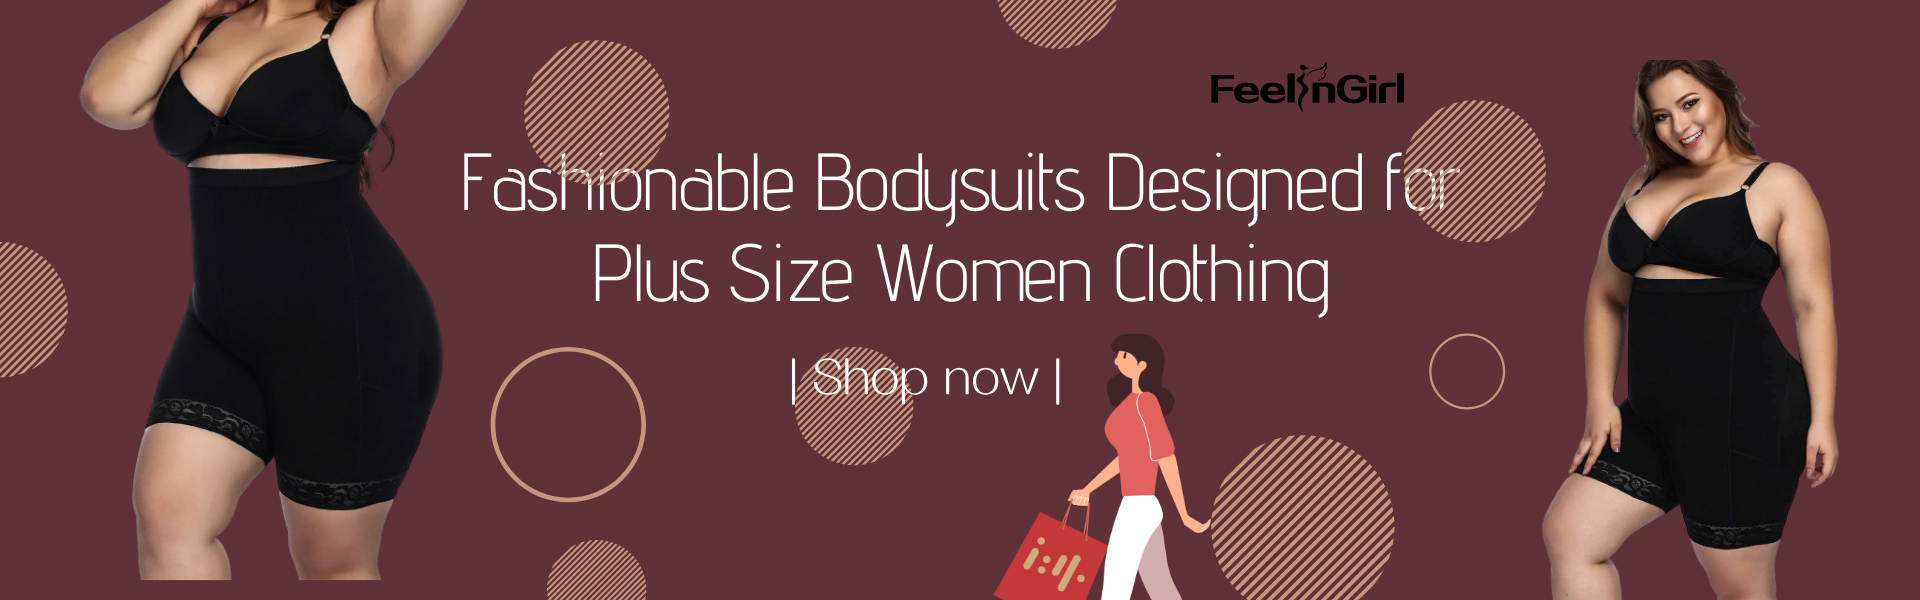 Fashionable Bodysuits Designed for Plus Size Women Clothing